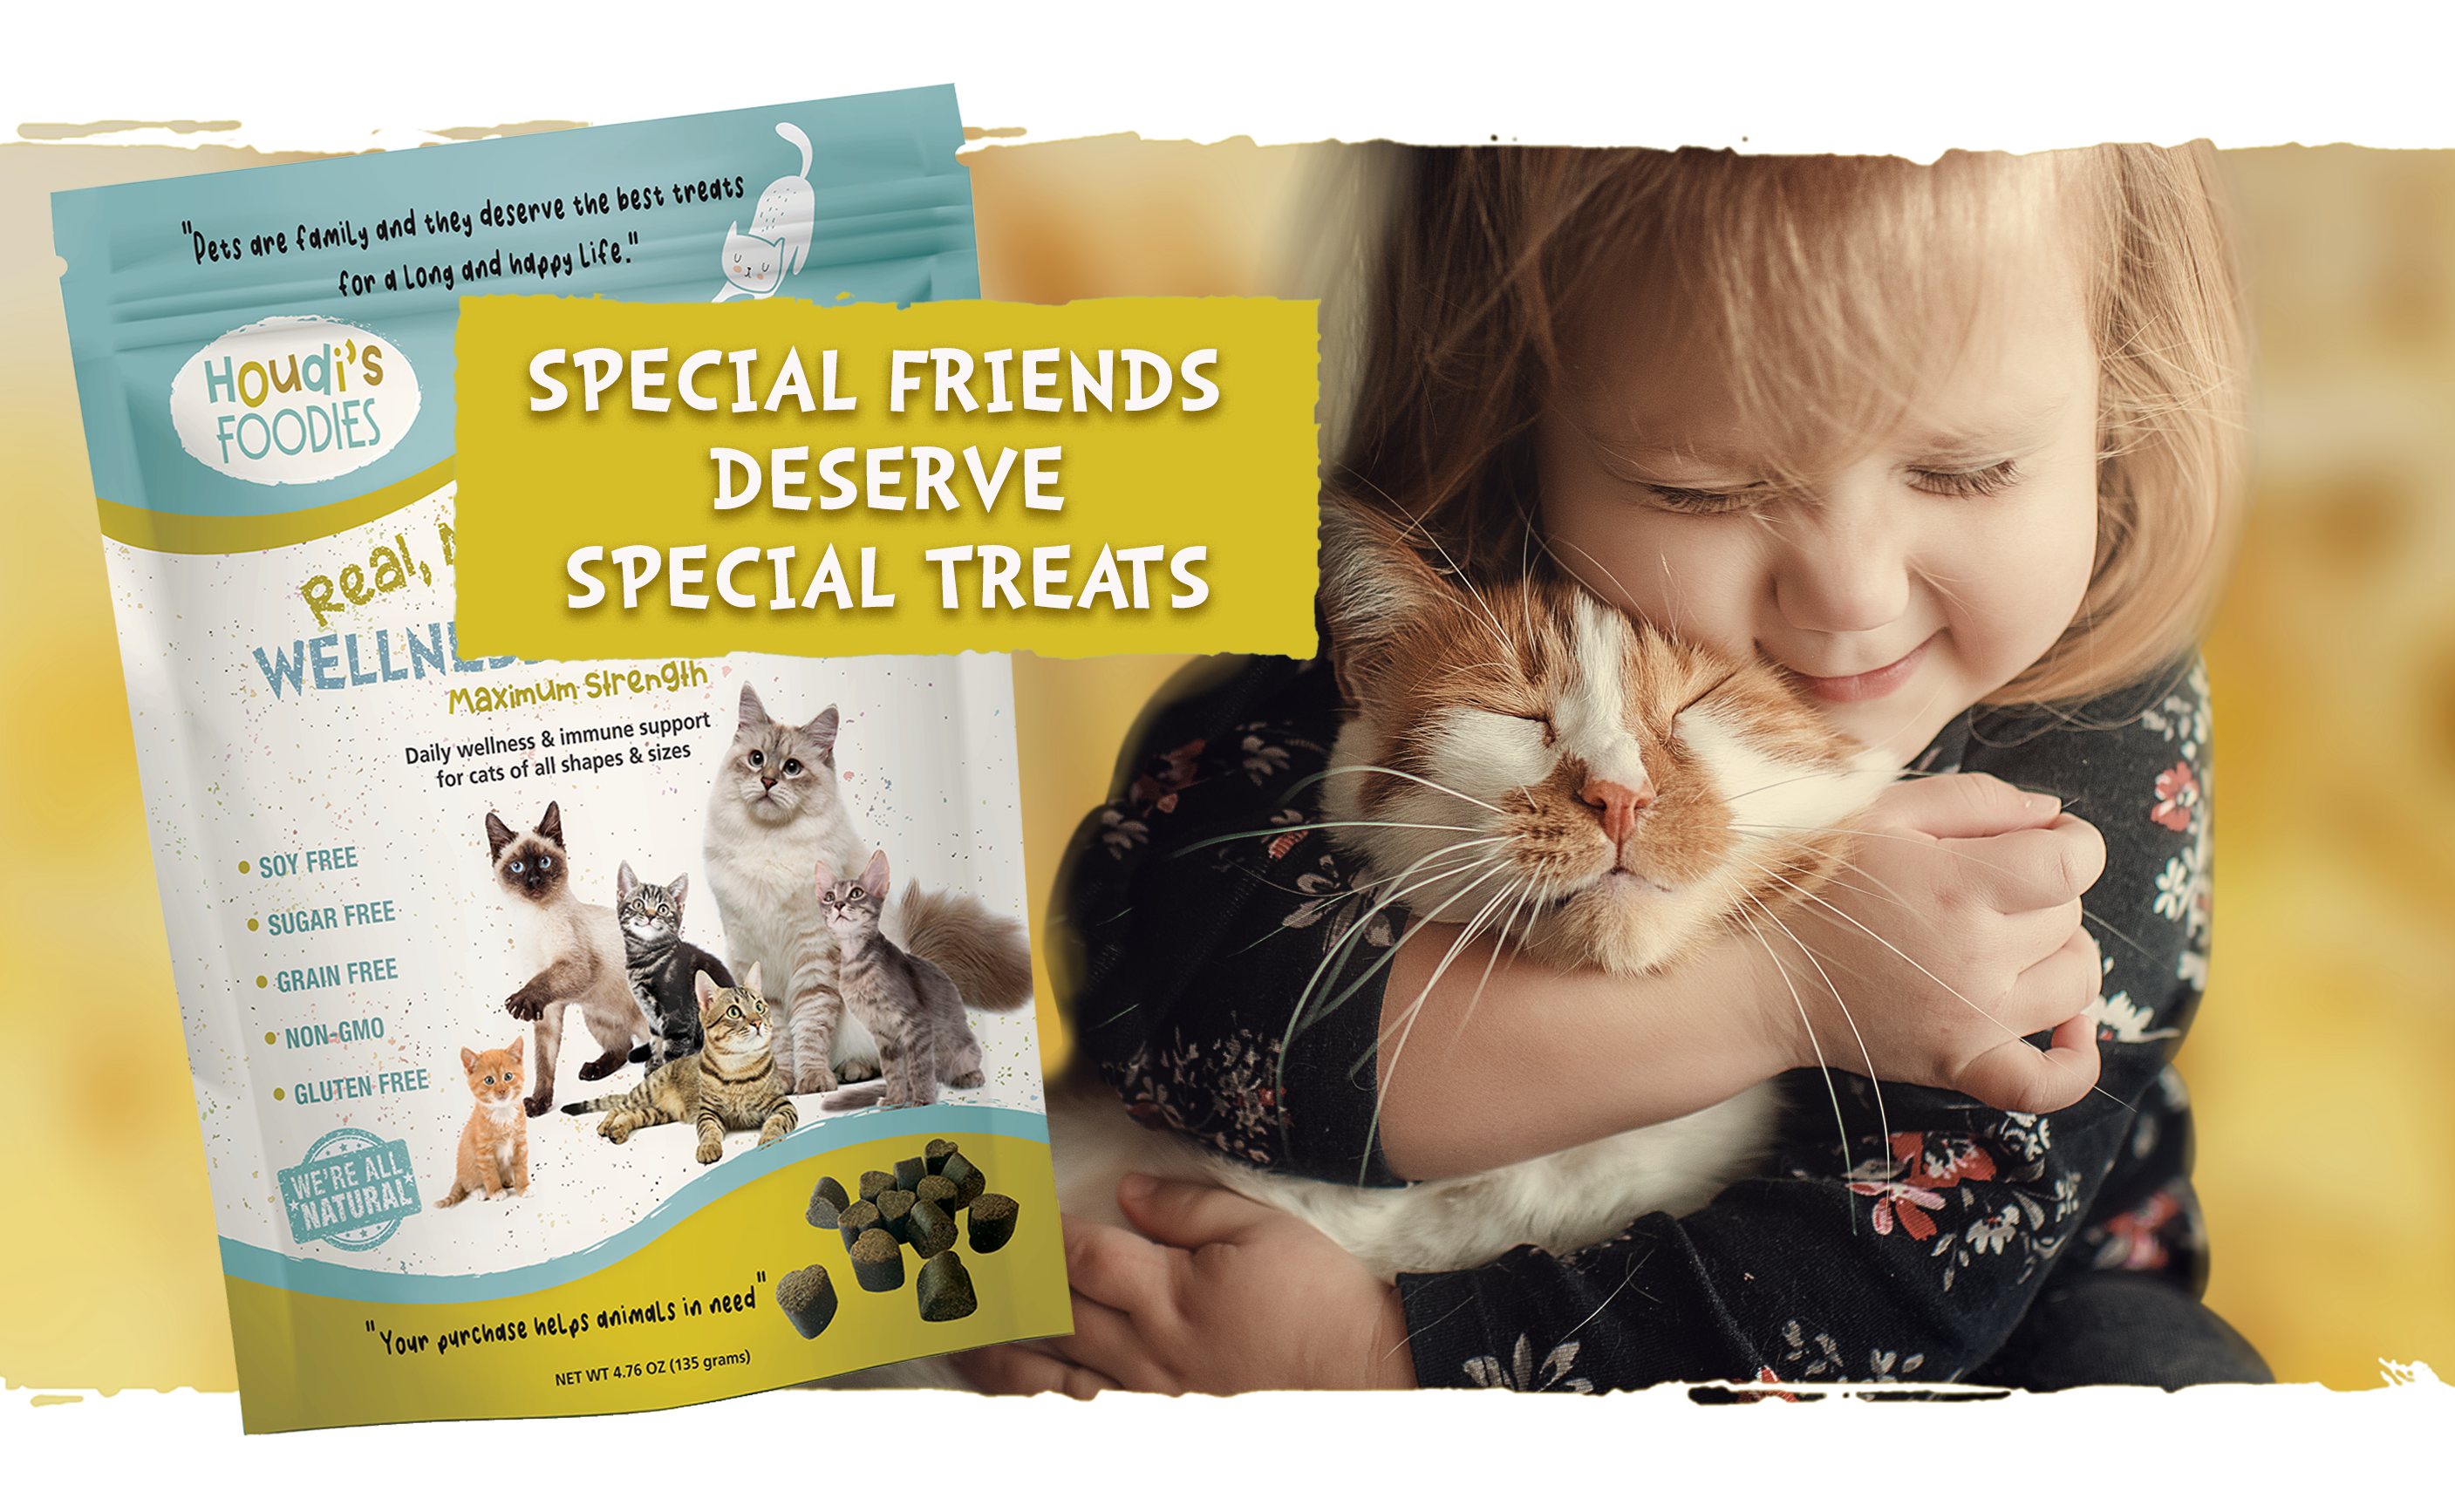 Special friends deserve special treats